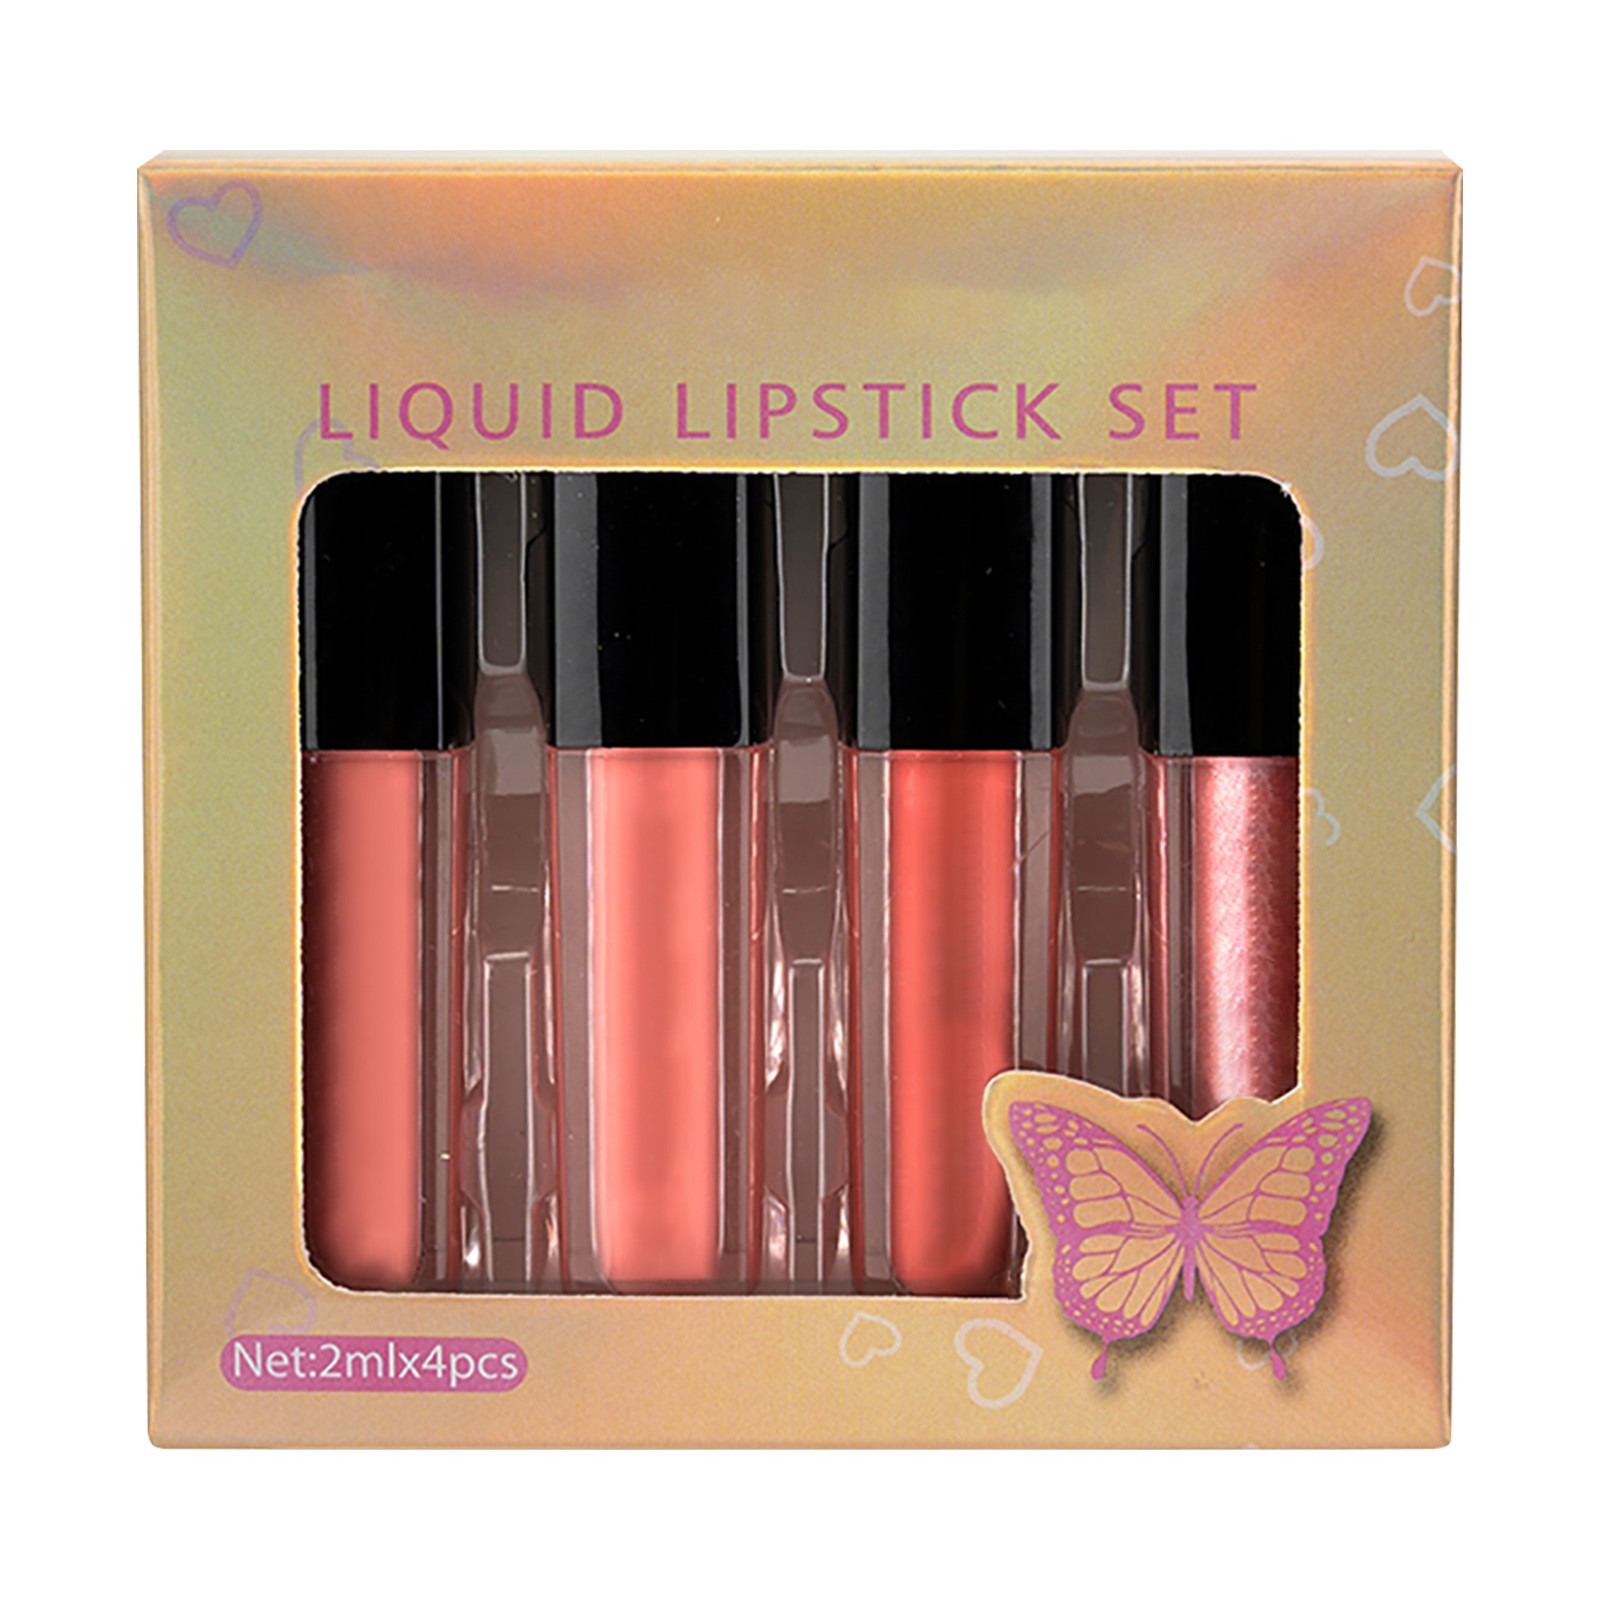 ASEIDFNSA Lipstick Pack Clear Gloss Non Stick Cup 4 Lip Gloss Butterfly Set Liquid Lip Glaze Non Stick Cup Lip Makeup Girl Gift Set - image 1 of 9